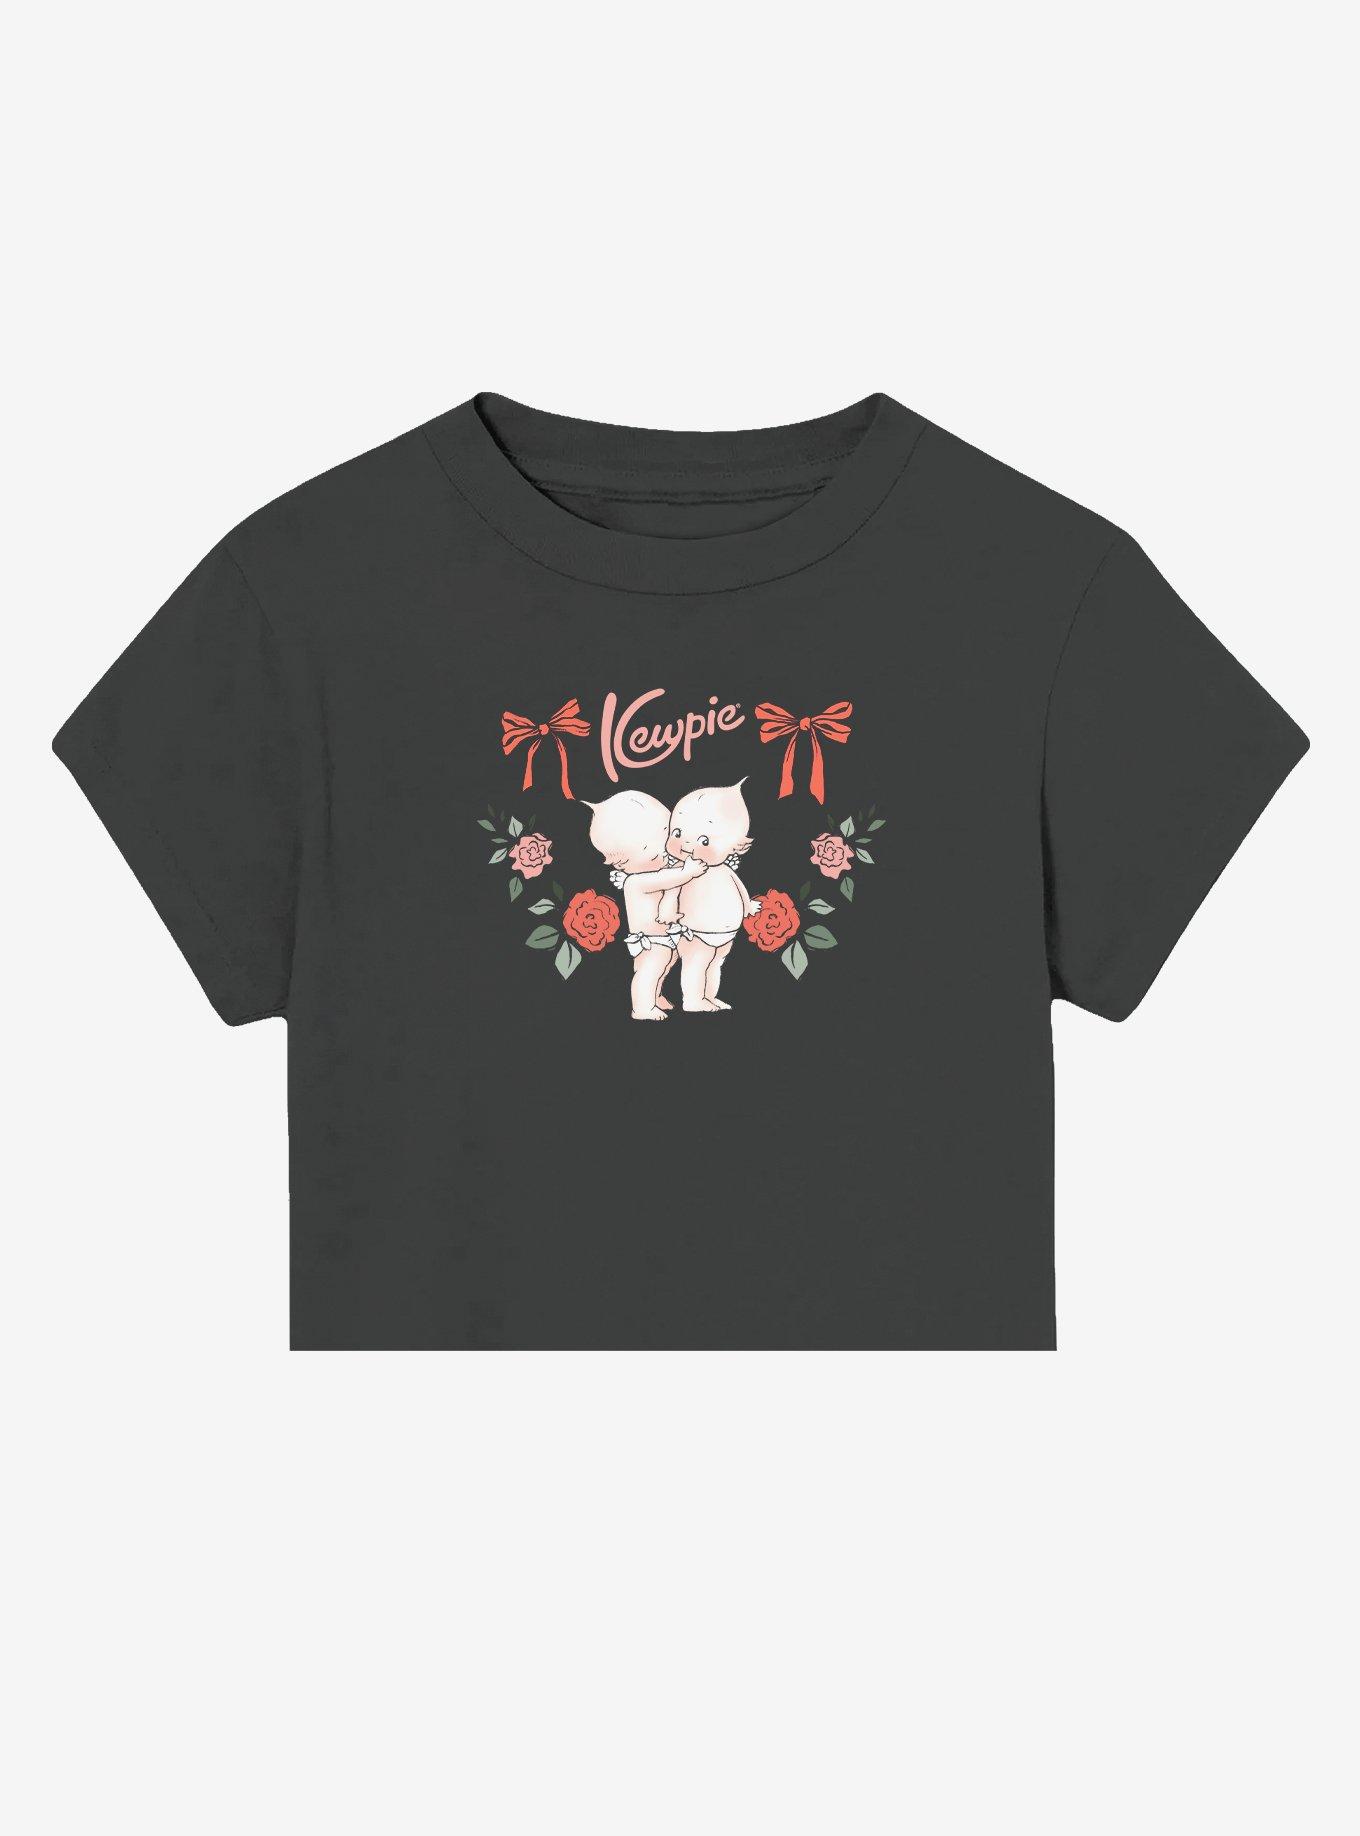 Kewpie Butterflies & Roses Boyfriend Fit Girls T-Shirt